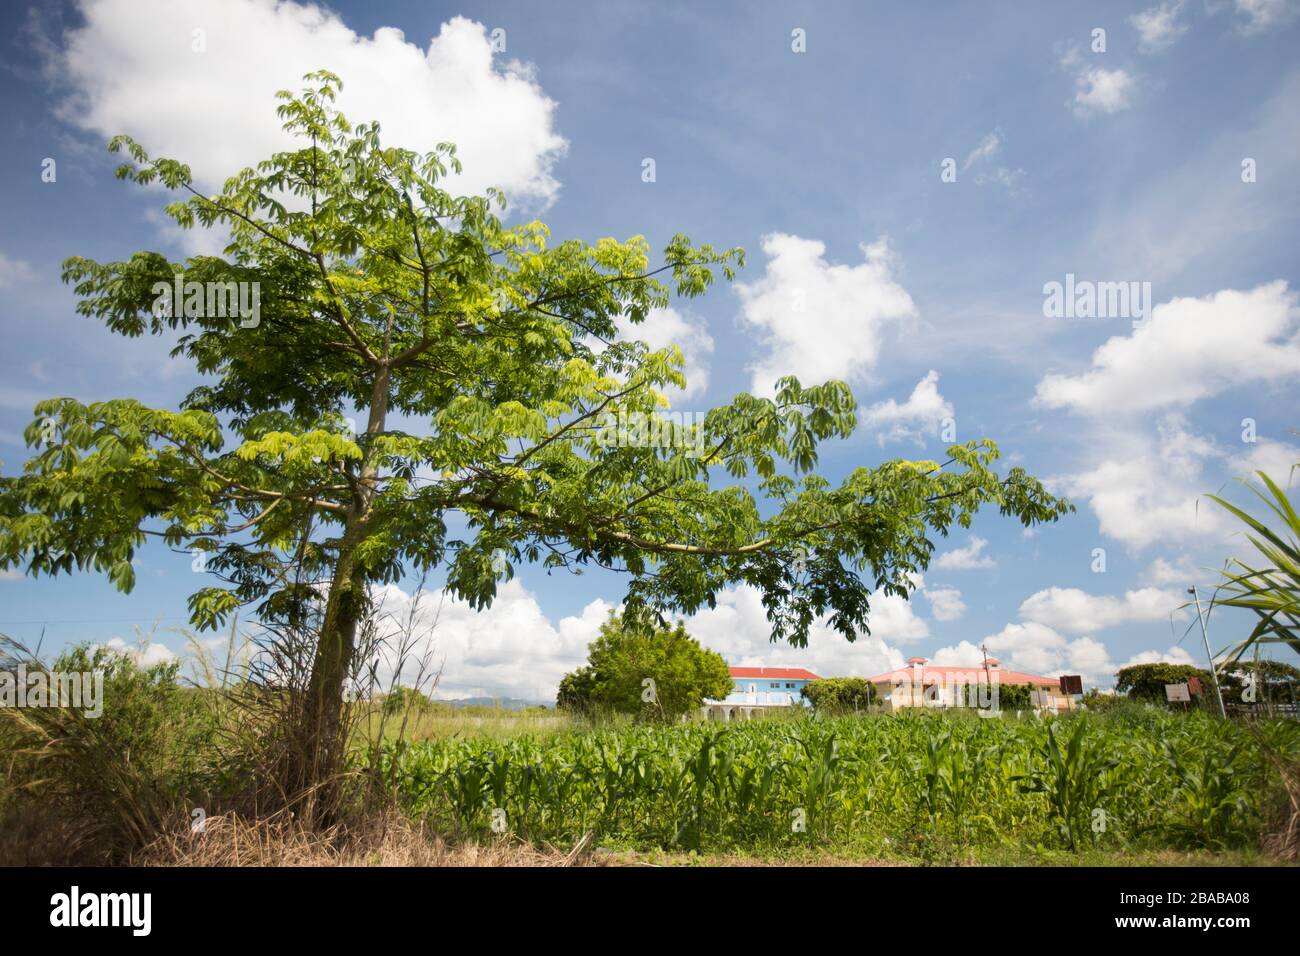 Landscape of rural farm community in Guatemala Stock Photo